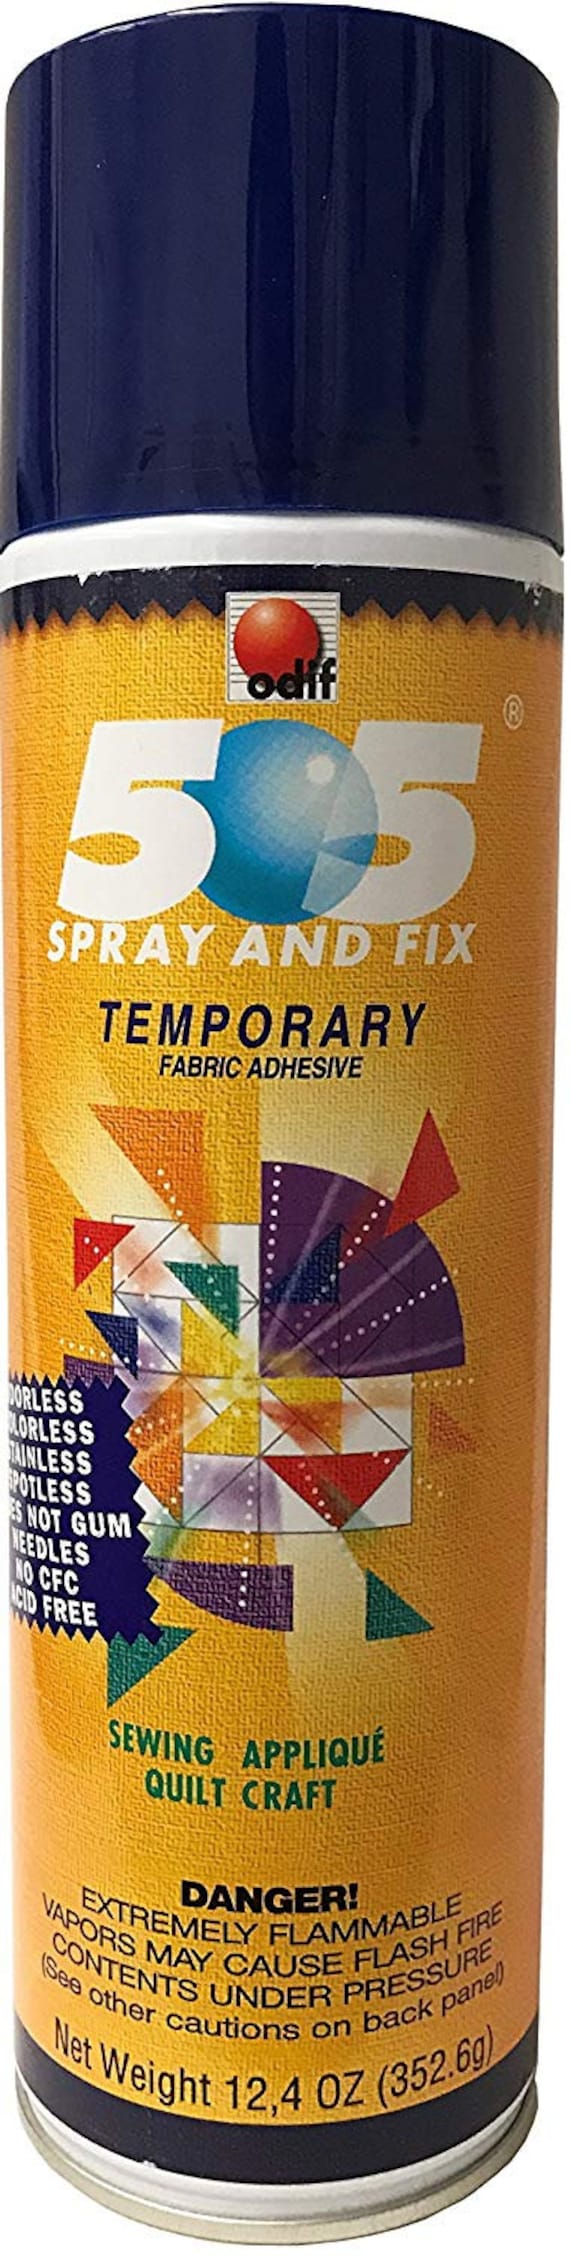 Odif 505 Fabric adhesive spray – The Common Thread